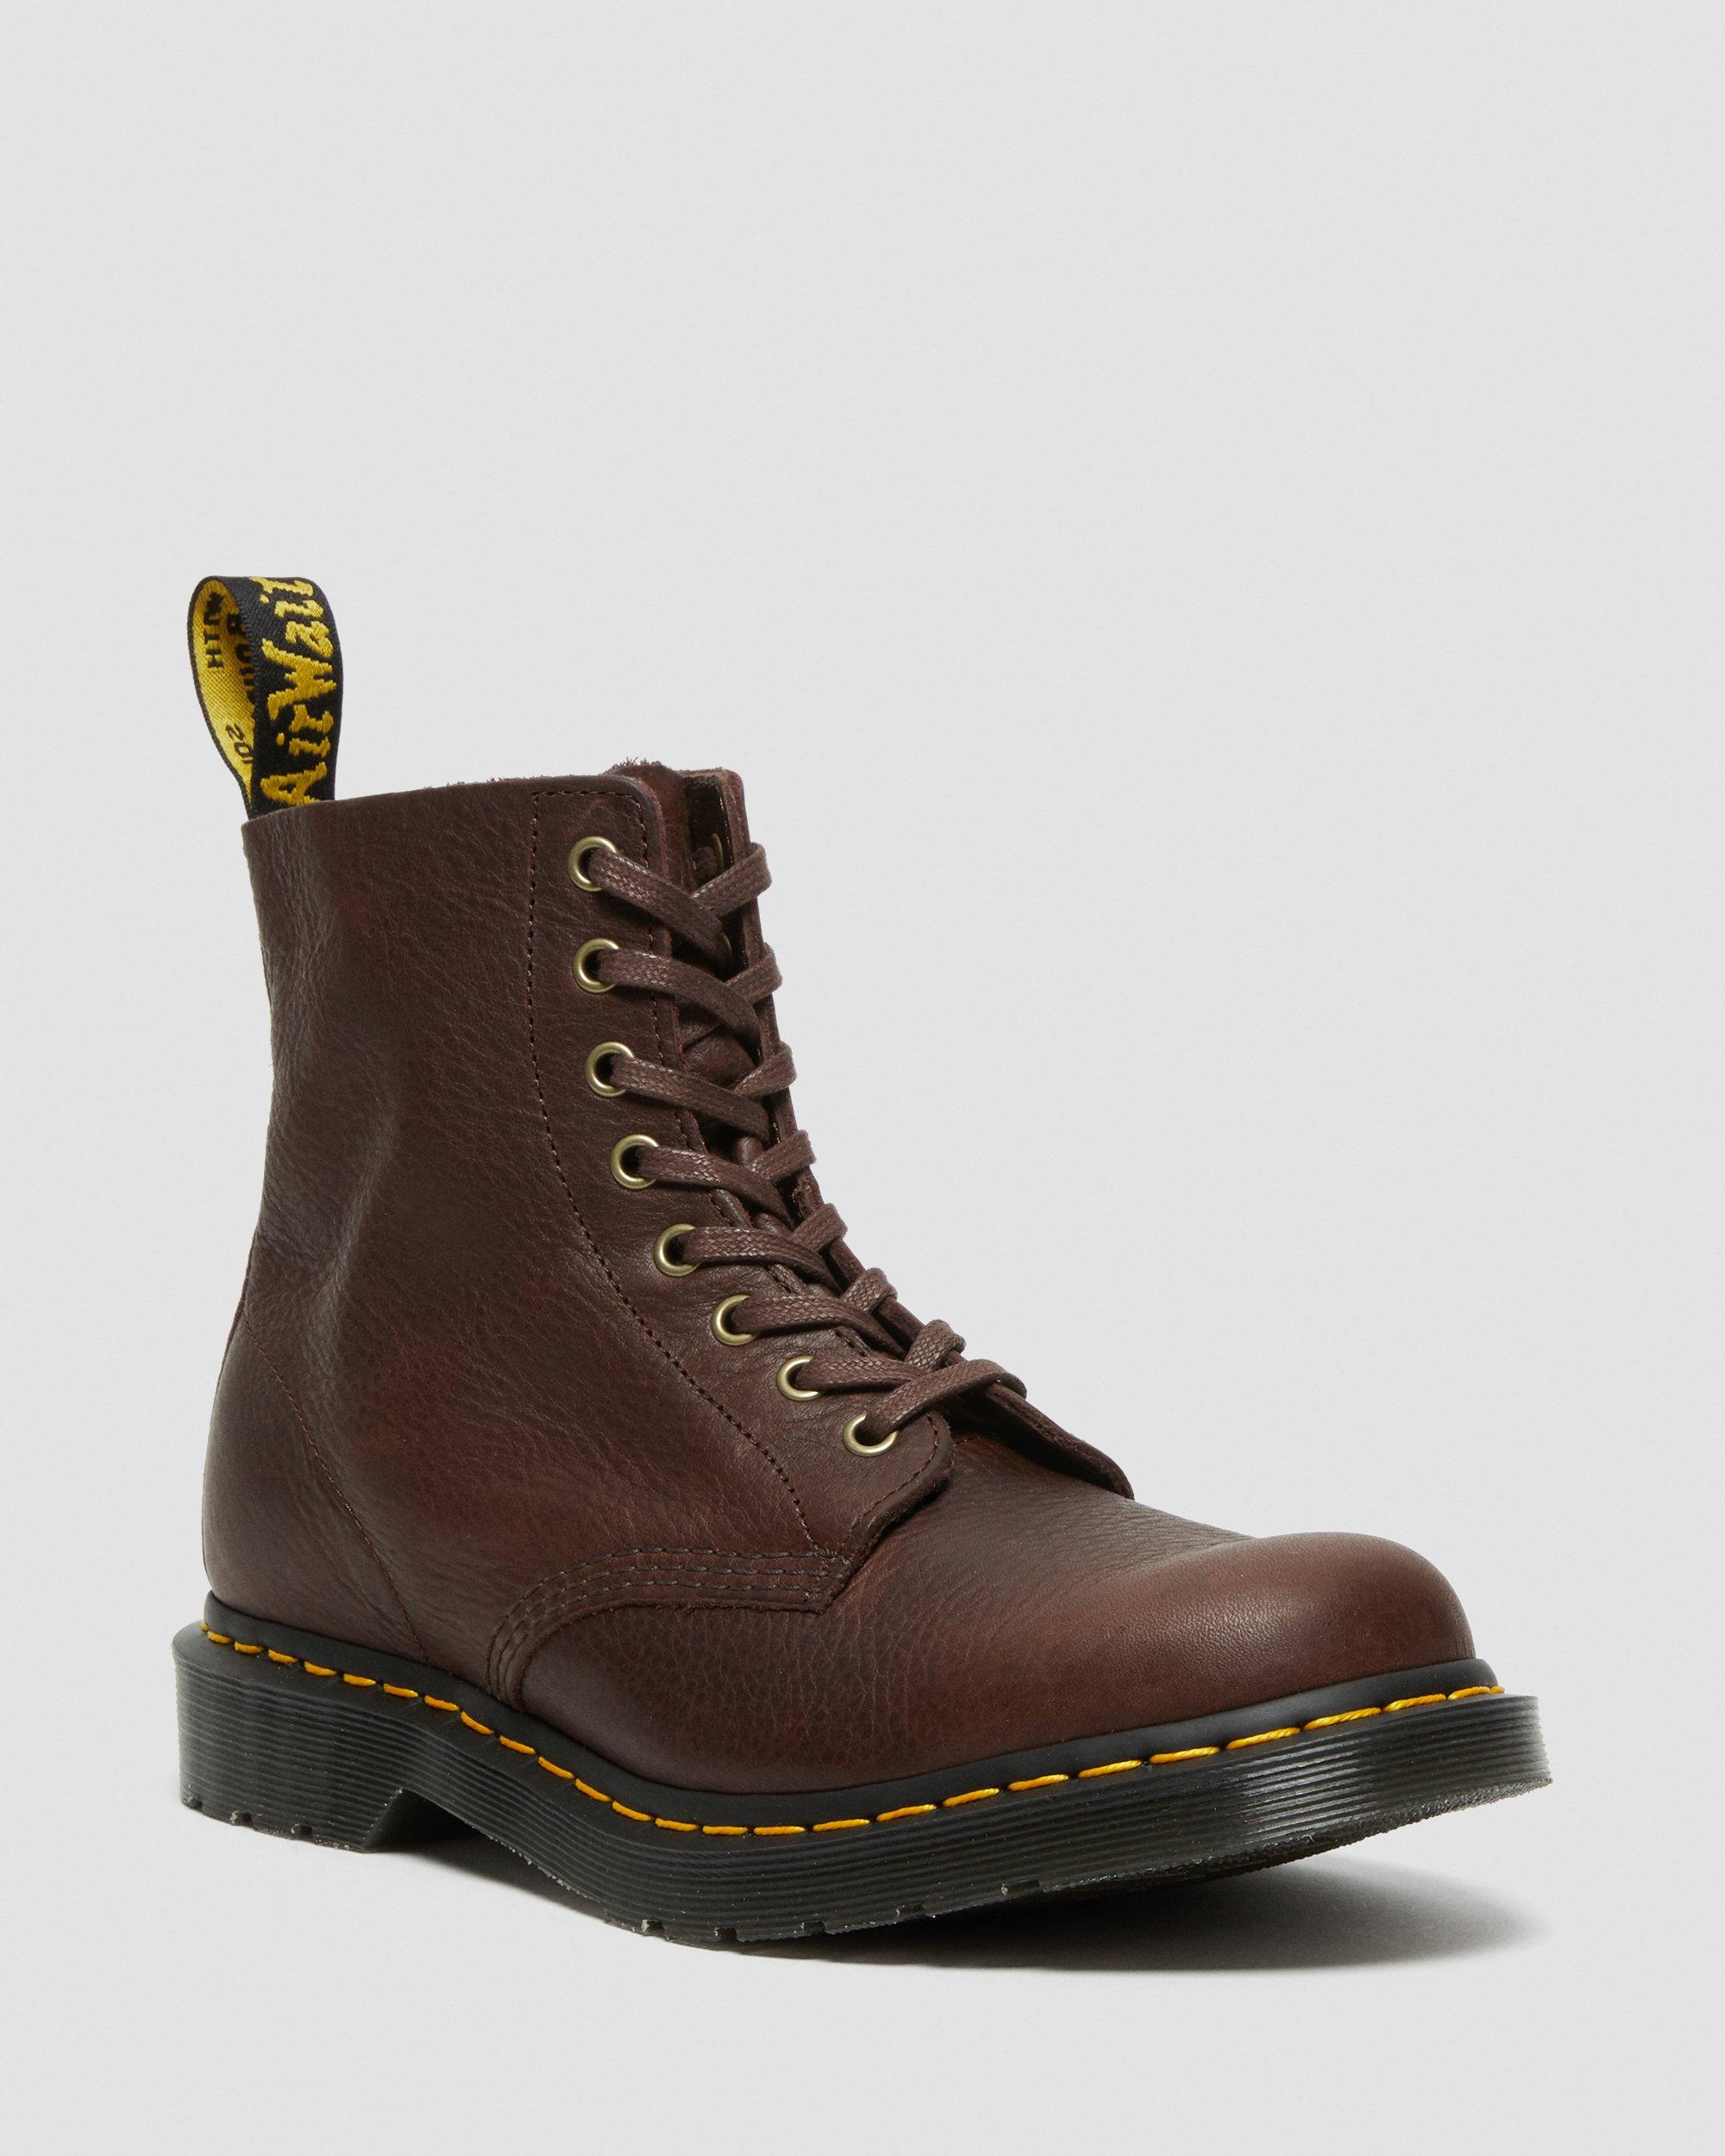 Buy > doc martens mens brown boots > in stock